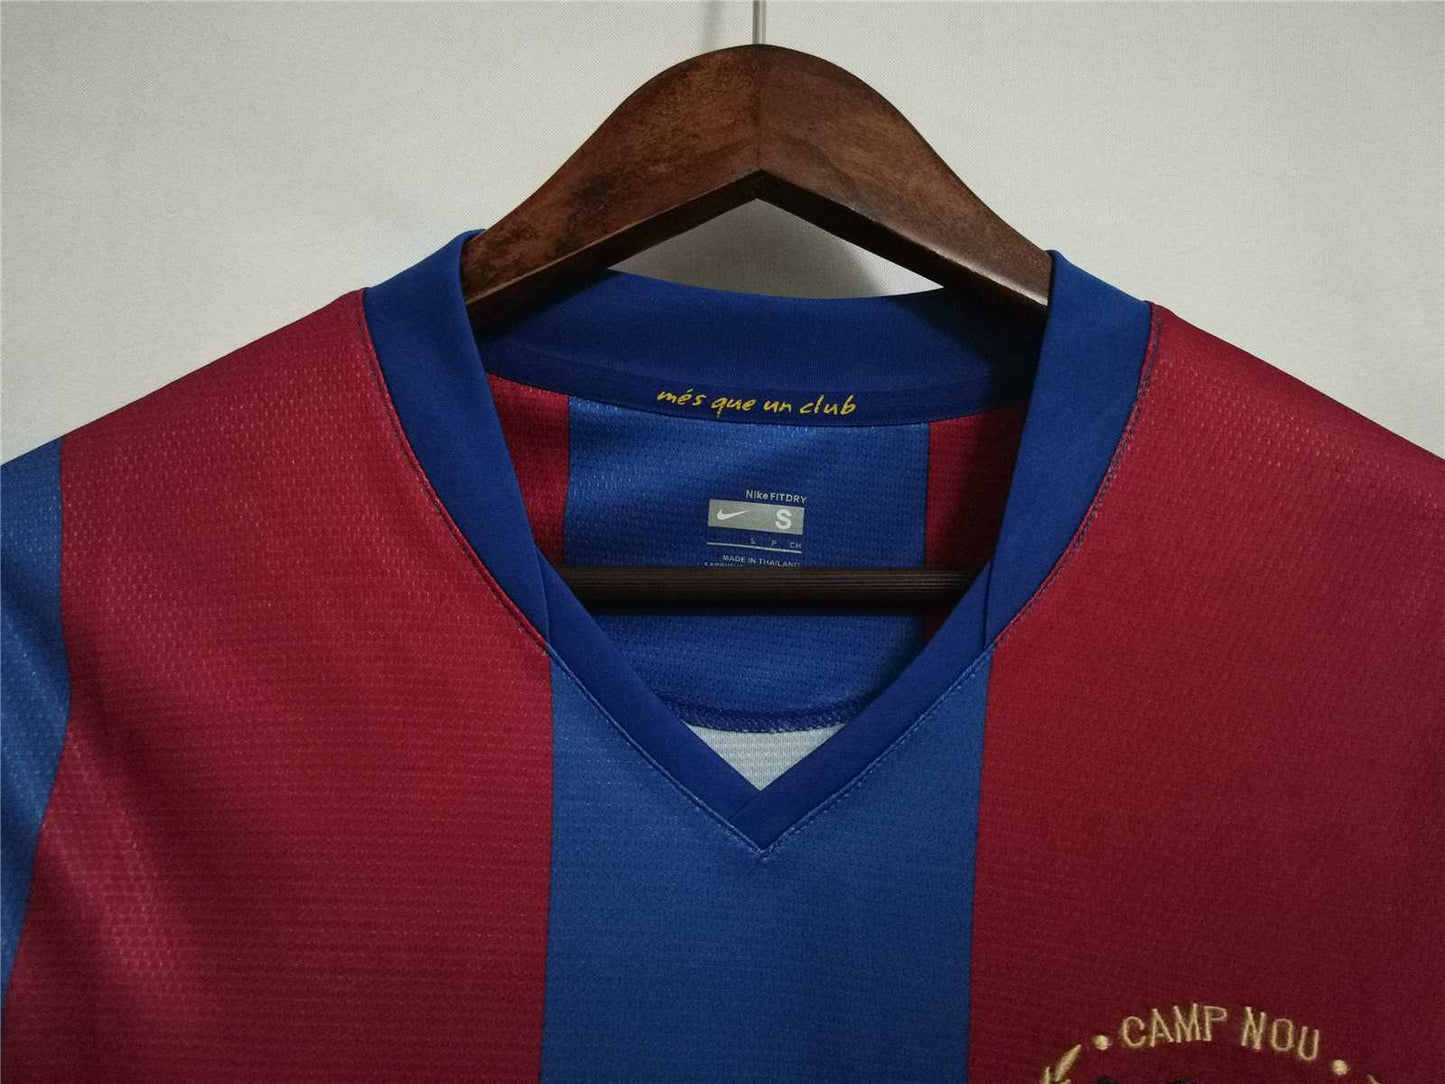 FC Barcelona 07-08 Home Long Sleeve Shirt